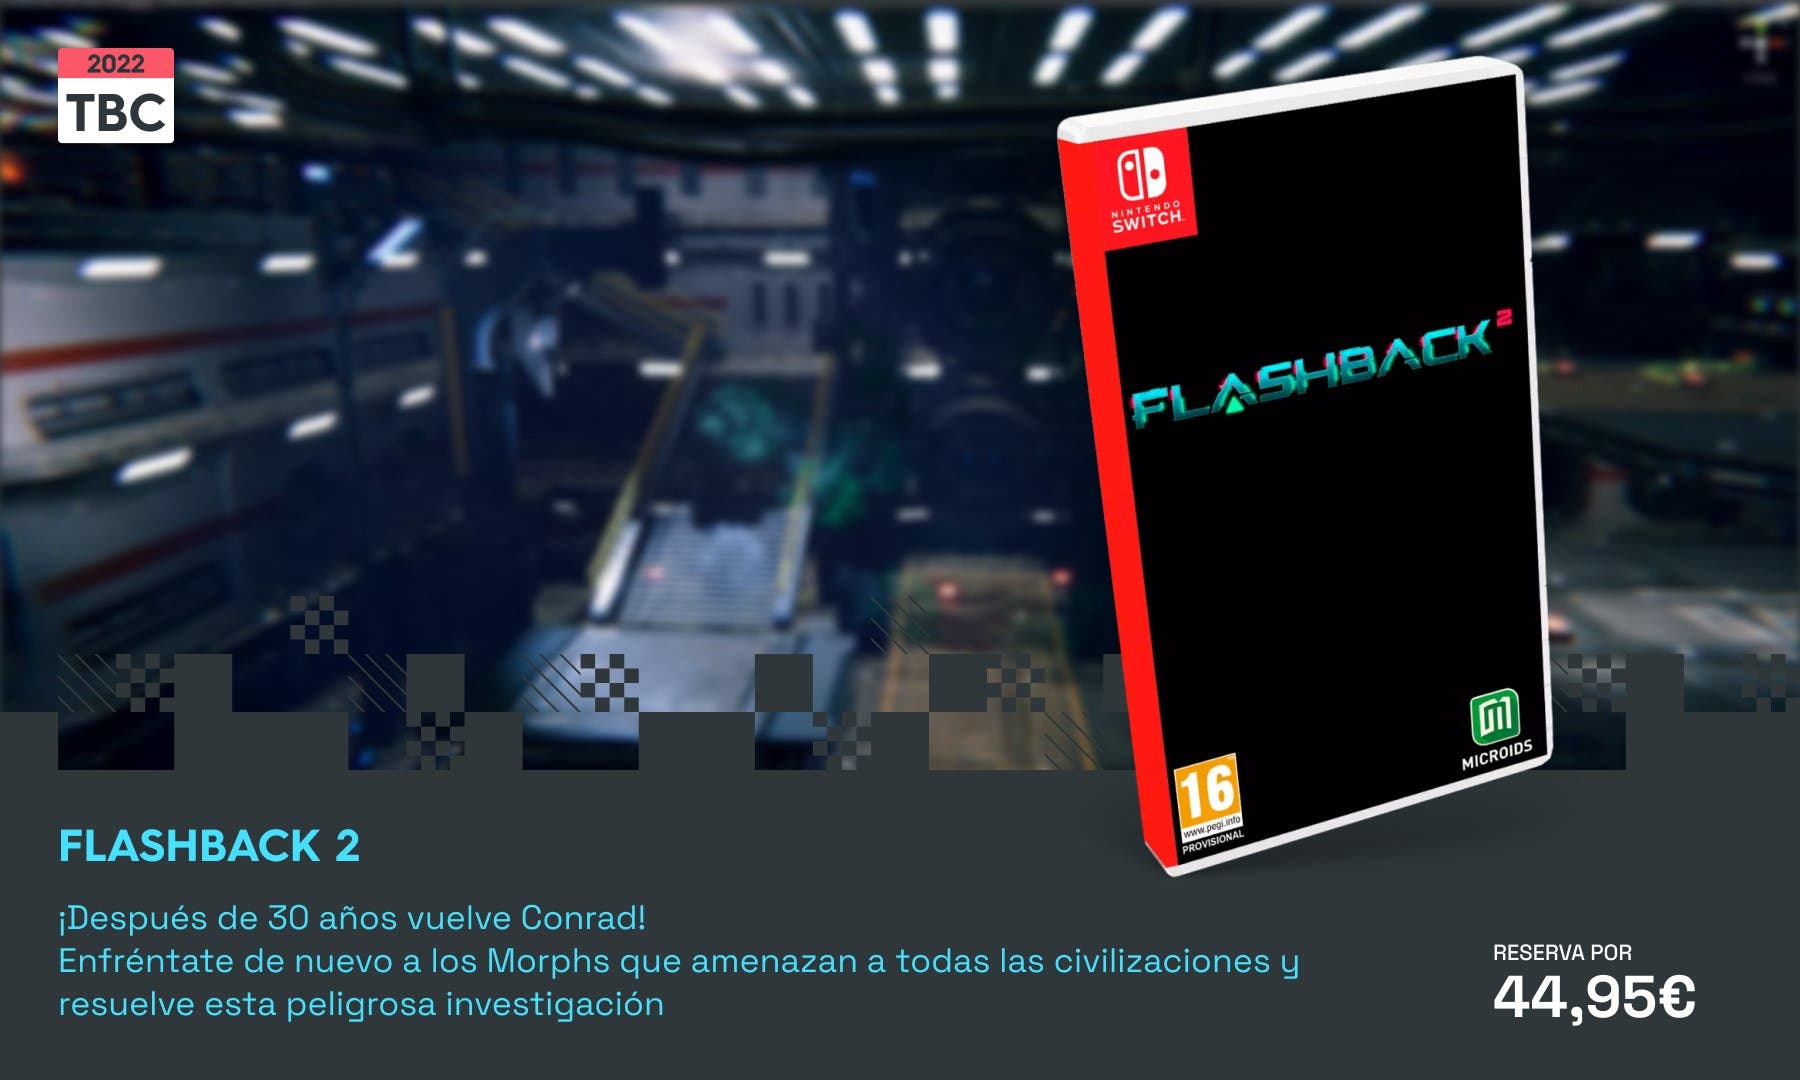 Conrad vuelve con Flashback 2 a Nintendo Switch: Reserva disponible